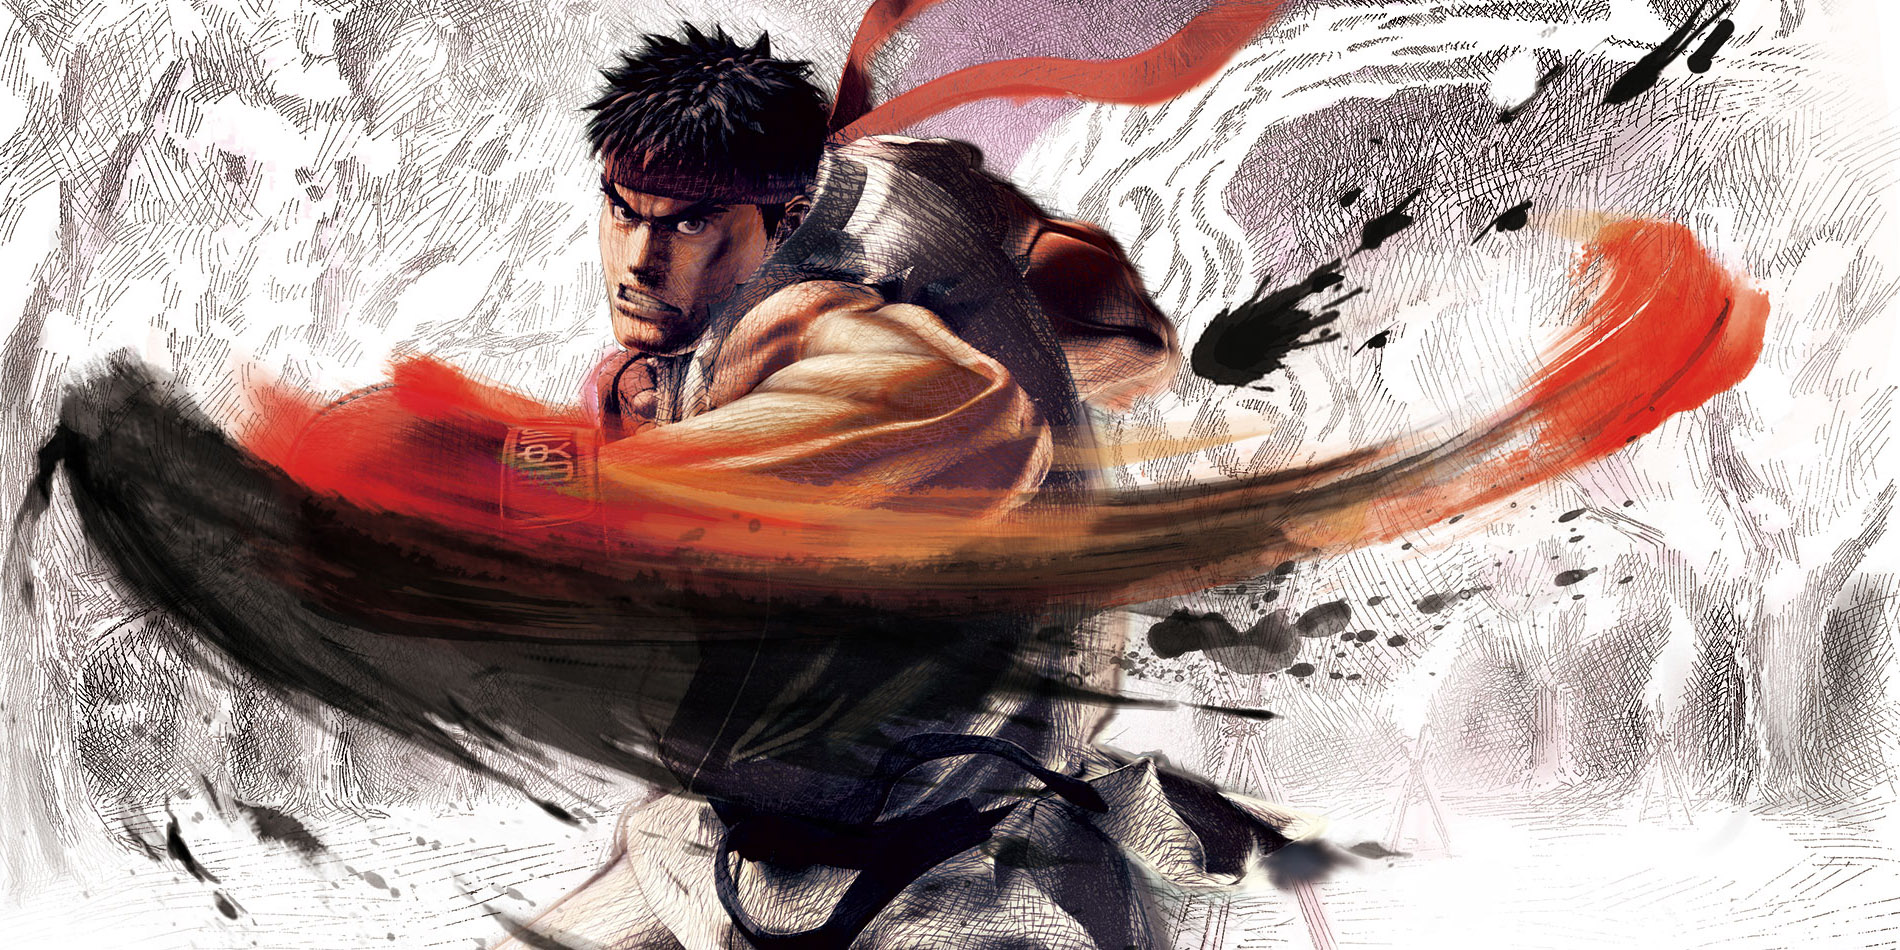 ryu street fighter wallpaper,kung fu,illustration,fictional character,cg artwork,graphic design